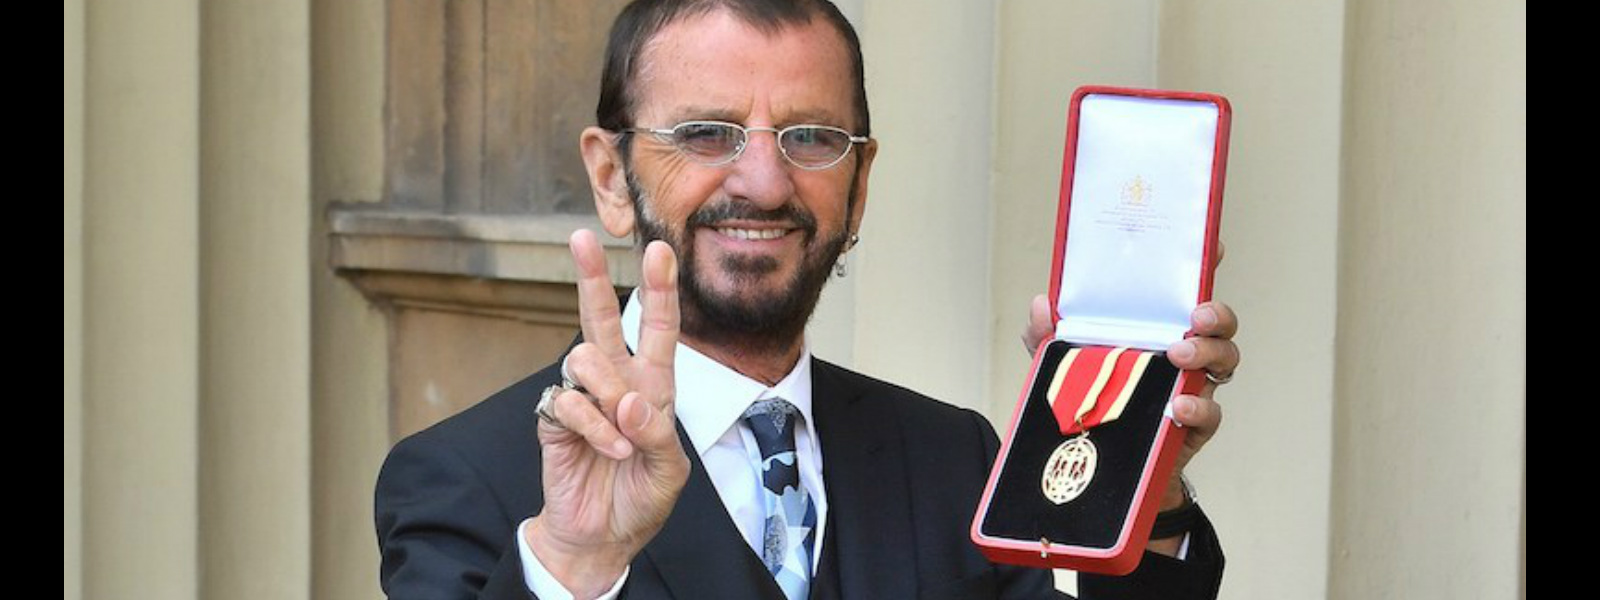 Beatles drummer, Ringo Starr knighted